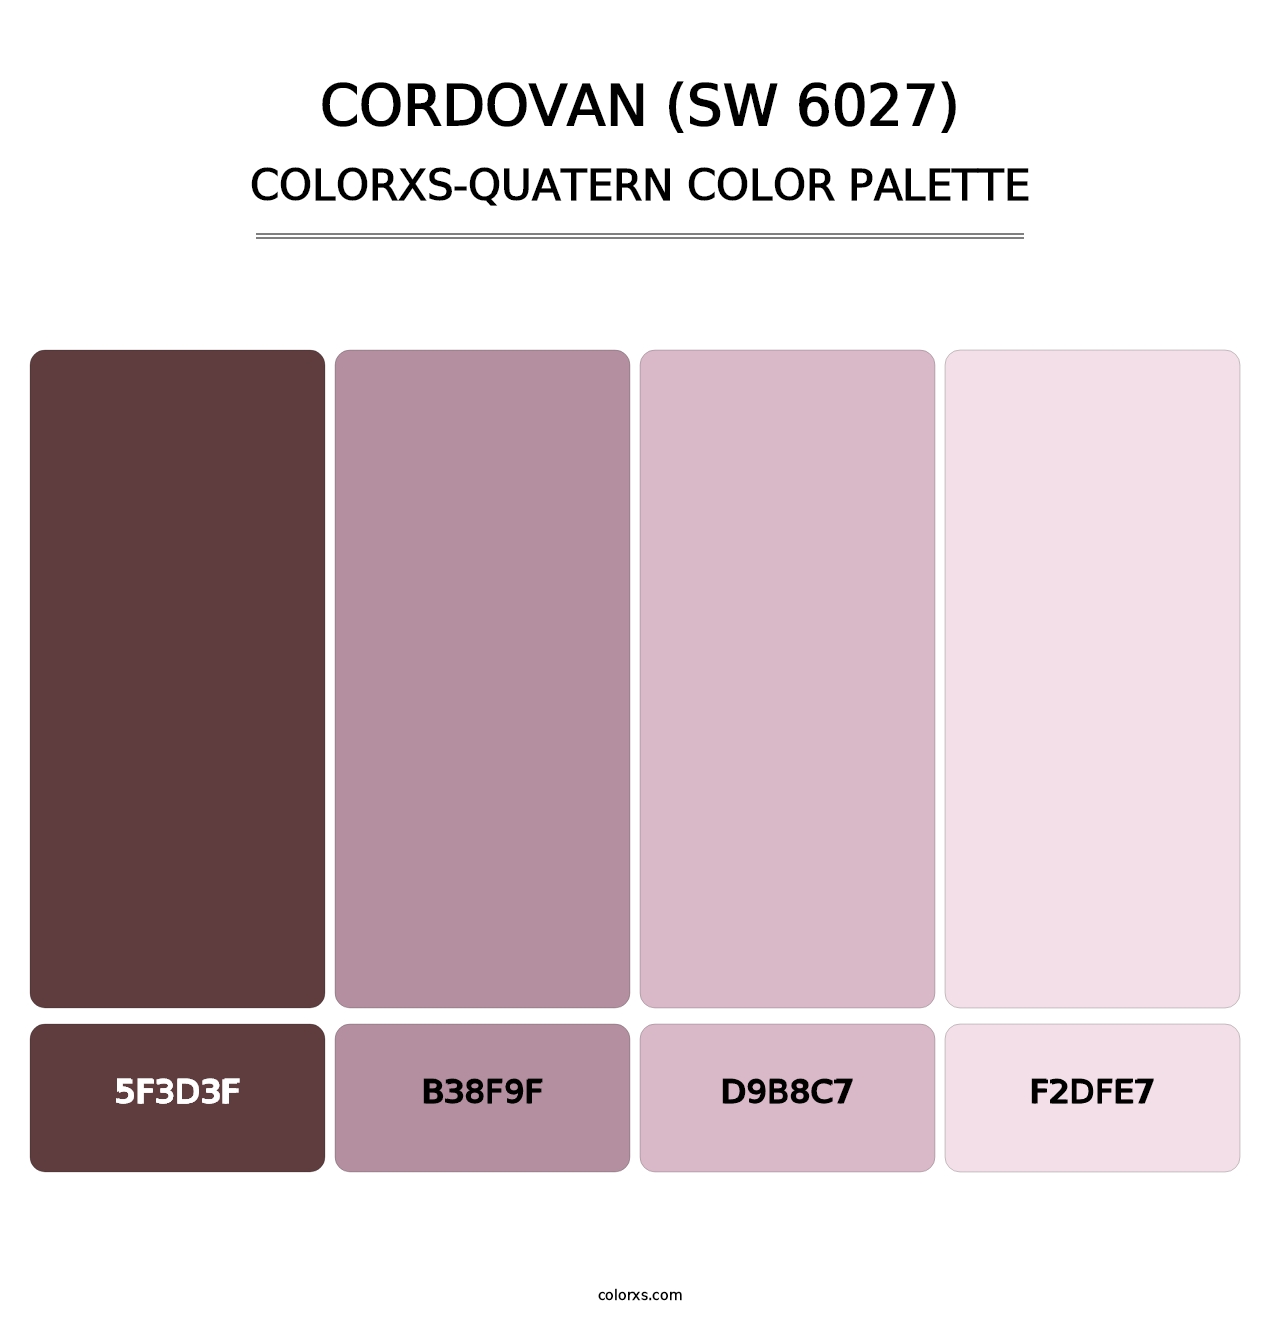 Cordovan (SW 6027) - Colorxs Quatern Palette